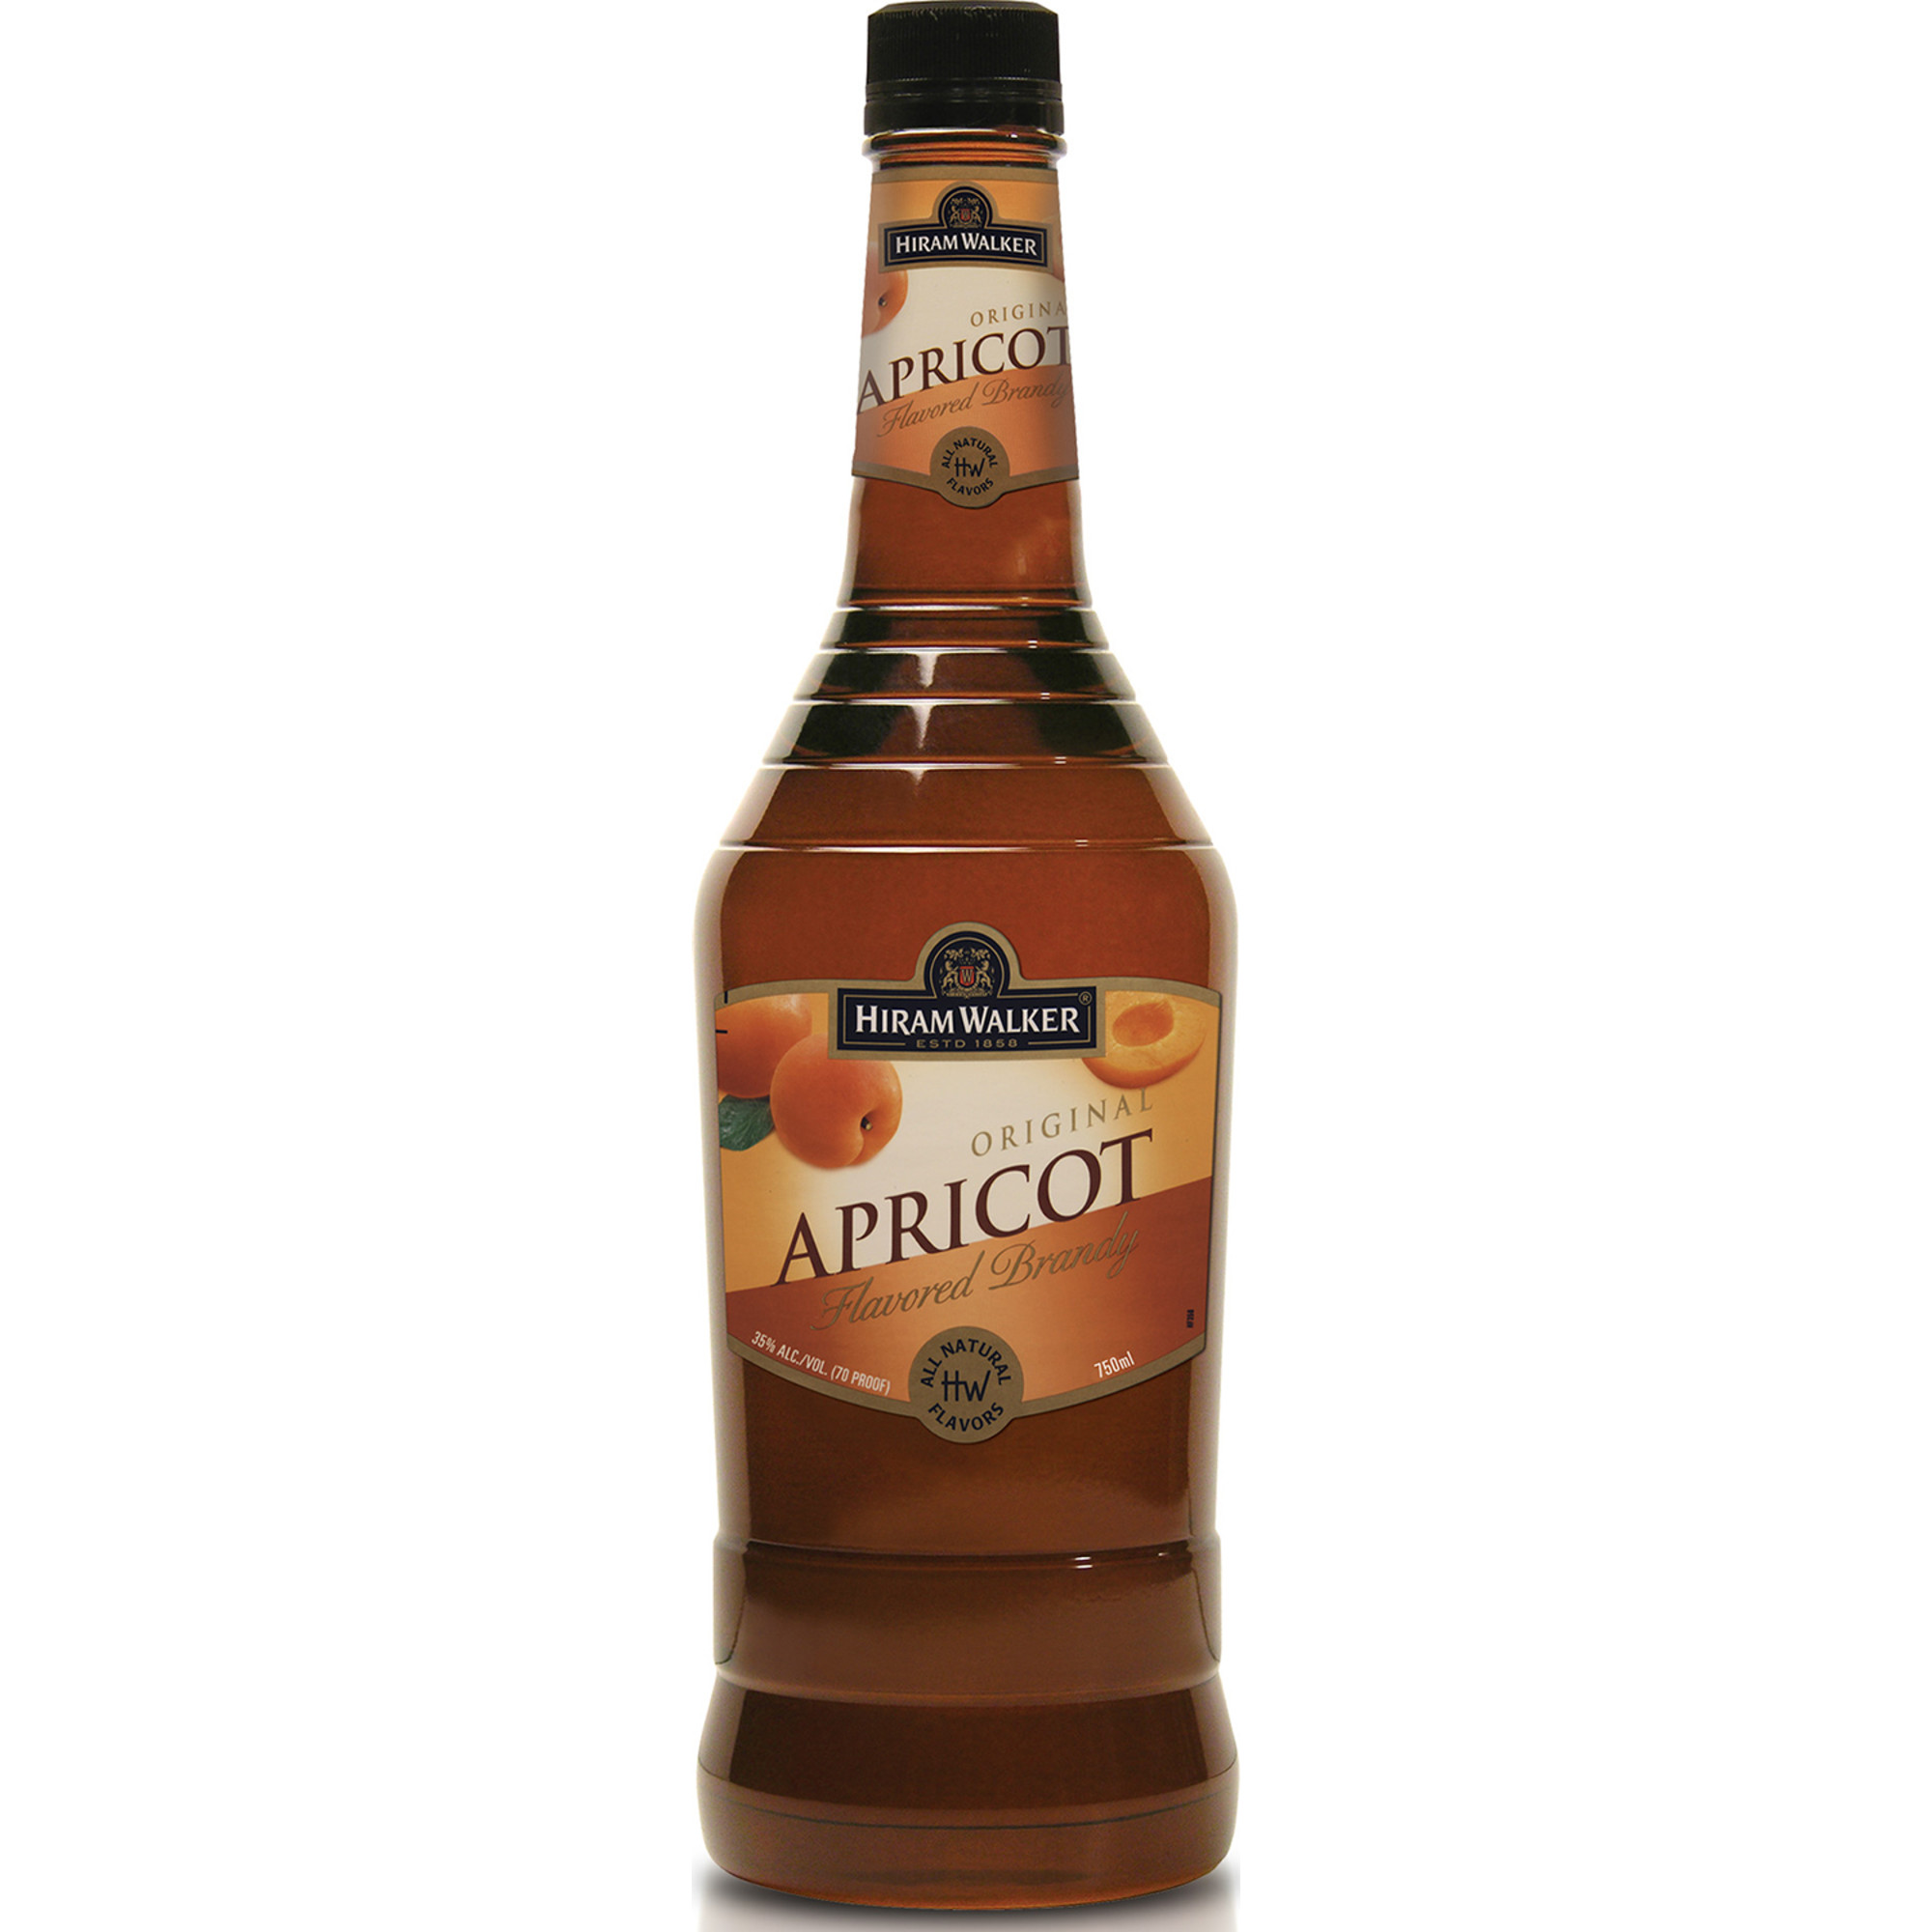 Hiram Walker Apricot Brandy 750mL Bottle - image 1 of 3